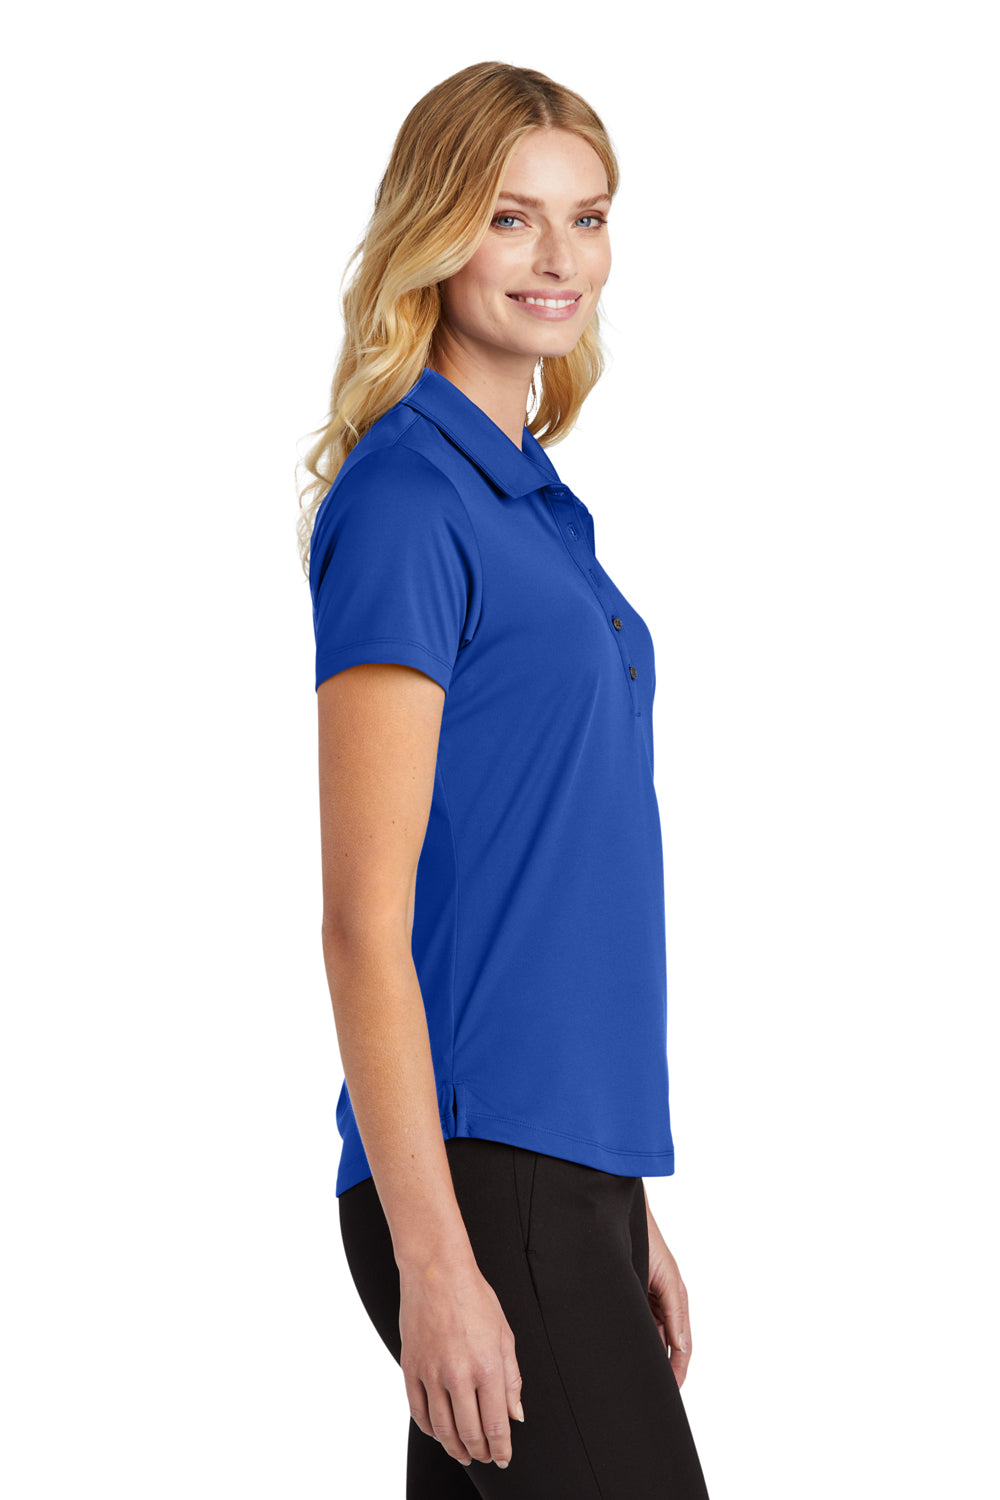 Port Authority LK864 C-Free Performance Short Sleeve Polo Shirt True Royal Blue Side